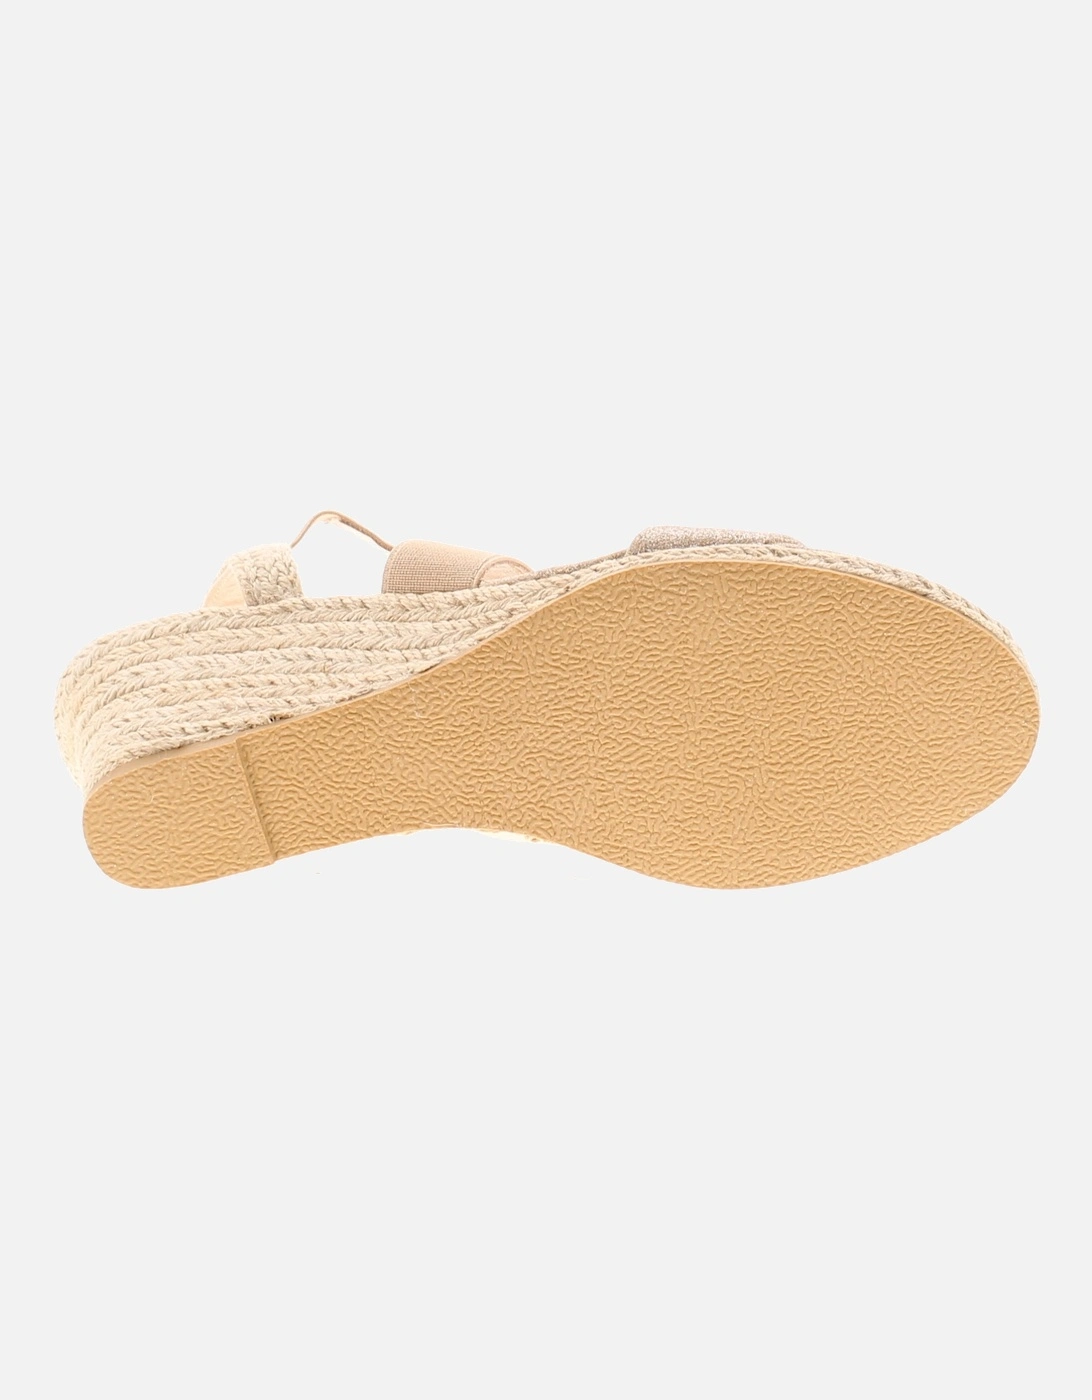 Womens Wedge Sandals Desire Elasticated beige gold UK Size